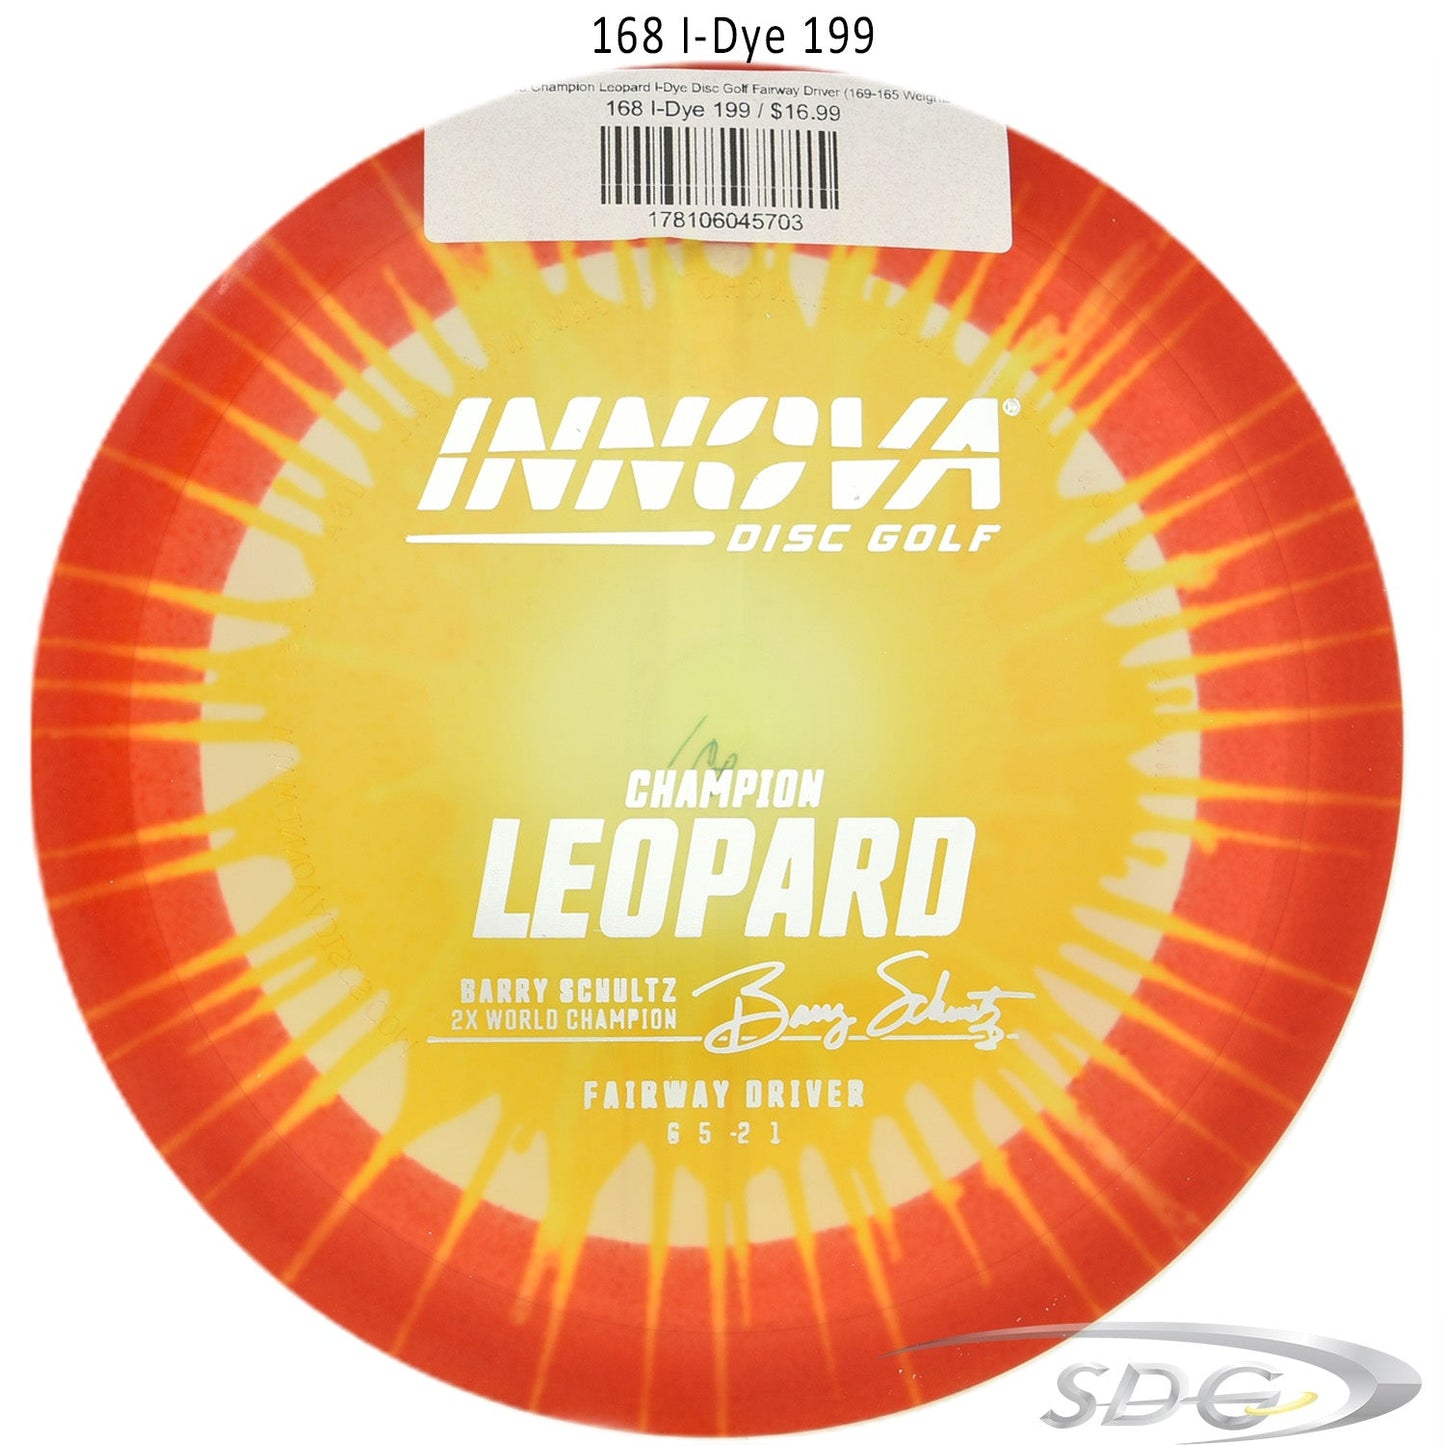 innova-champion-leopard-i-dye-disc-golf-fairway-driver 168 I-Dye 199 